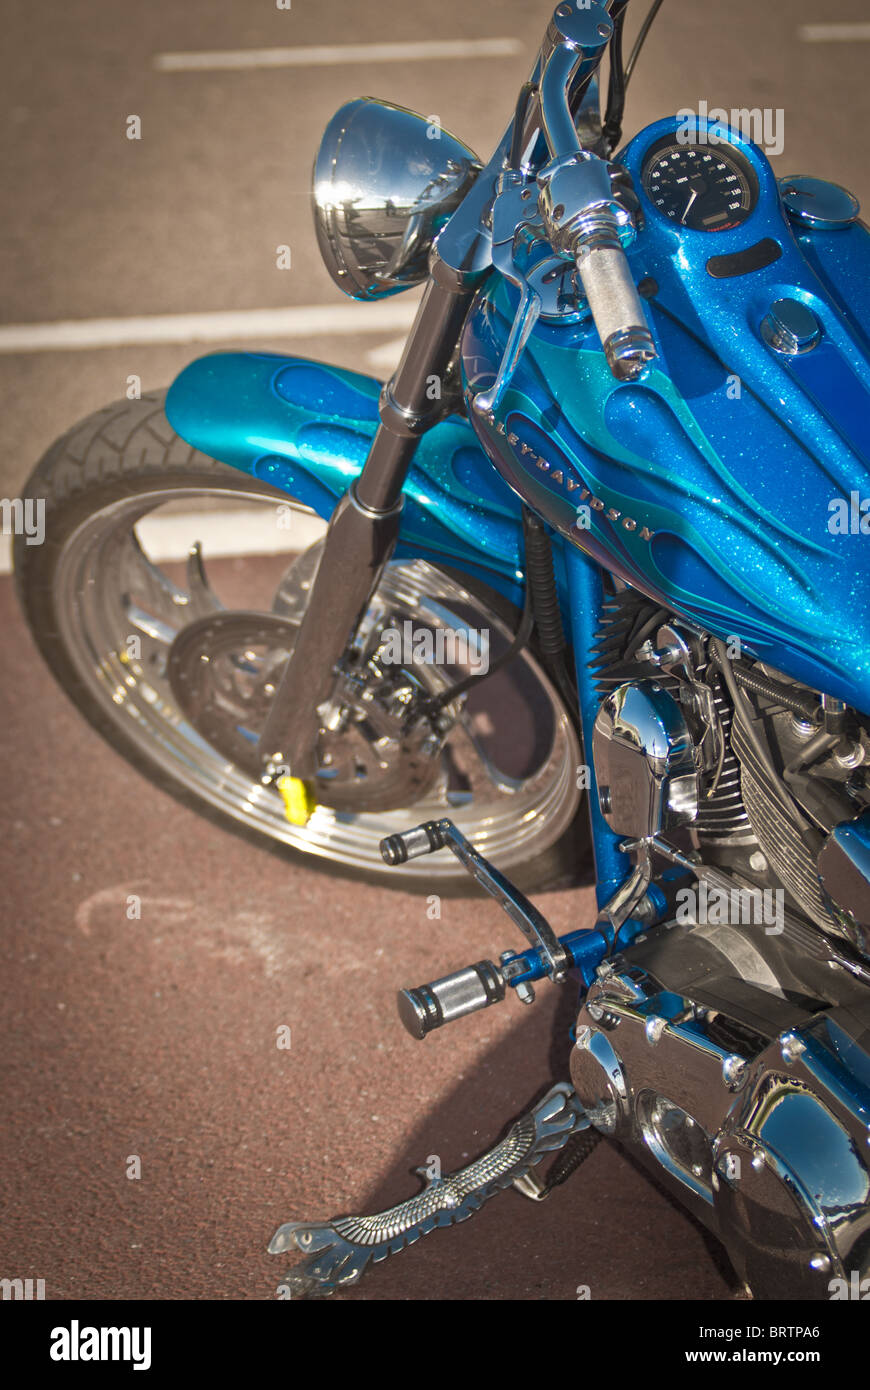 customized motorcycle Stock Photo